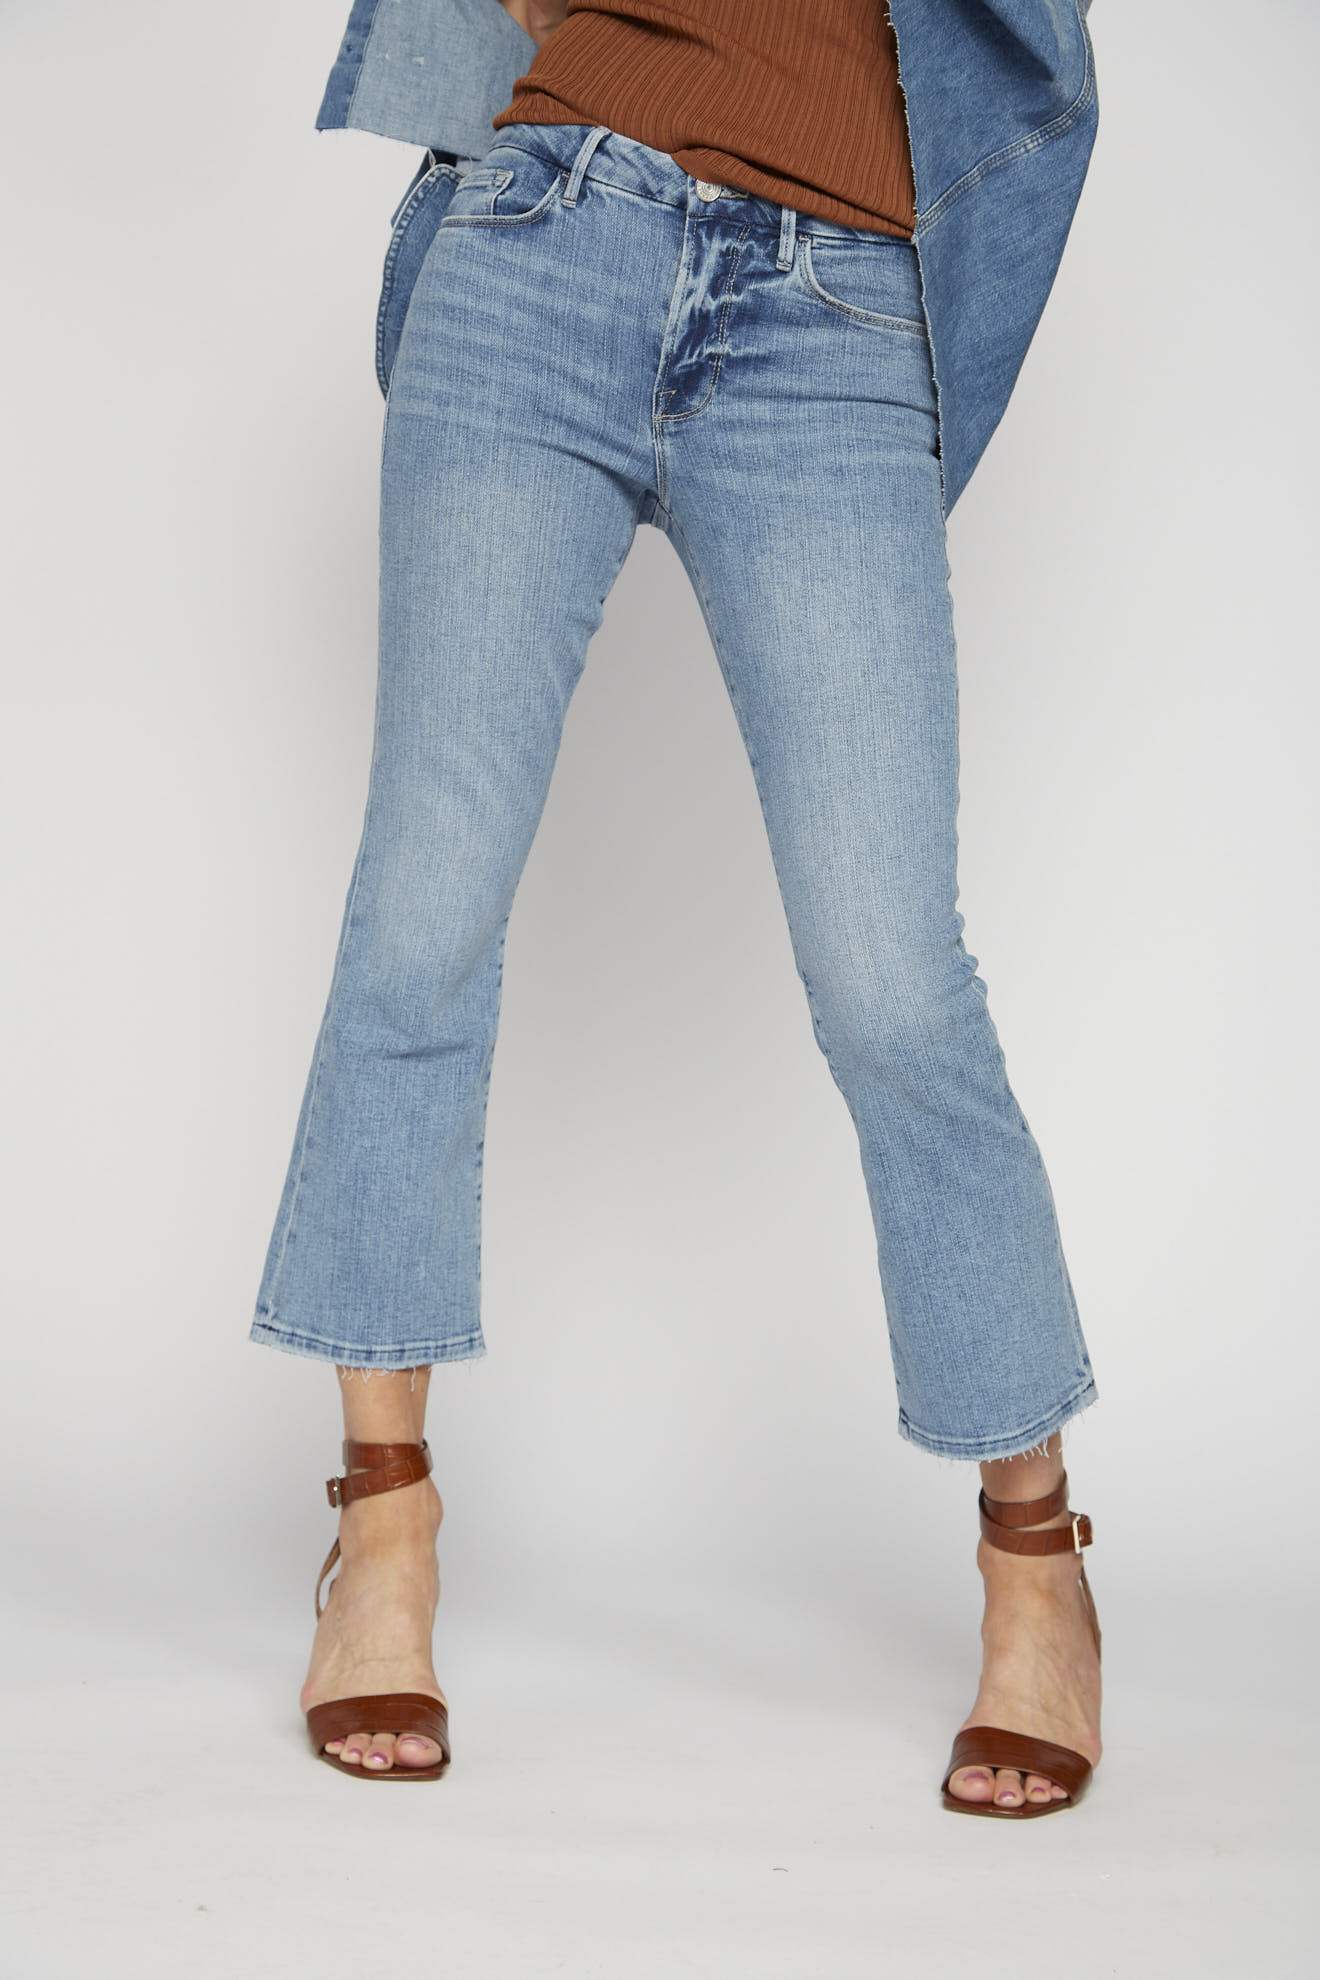 frame jeans denim plain mix model front